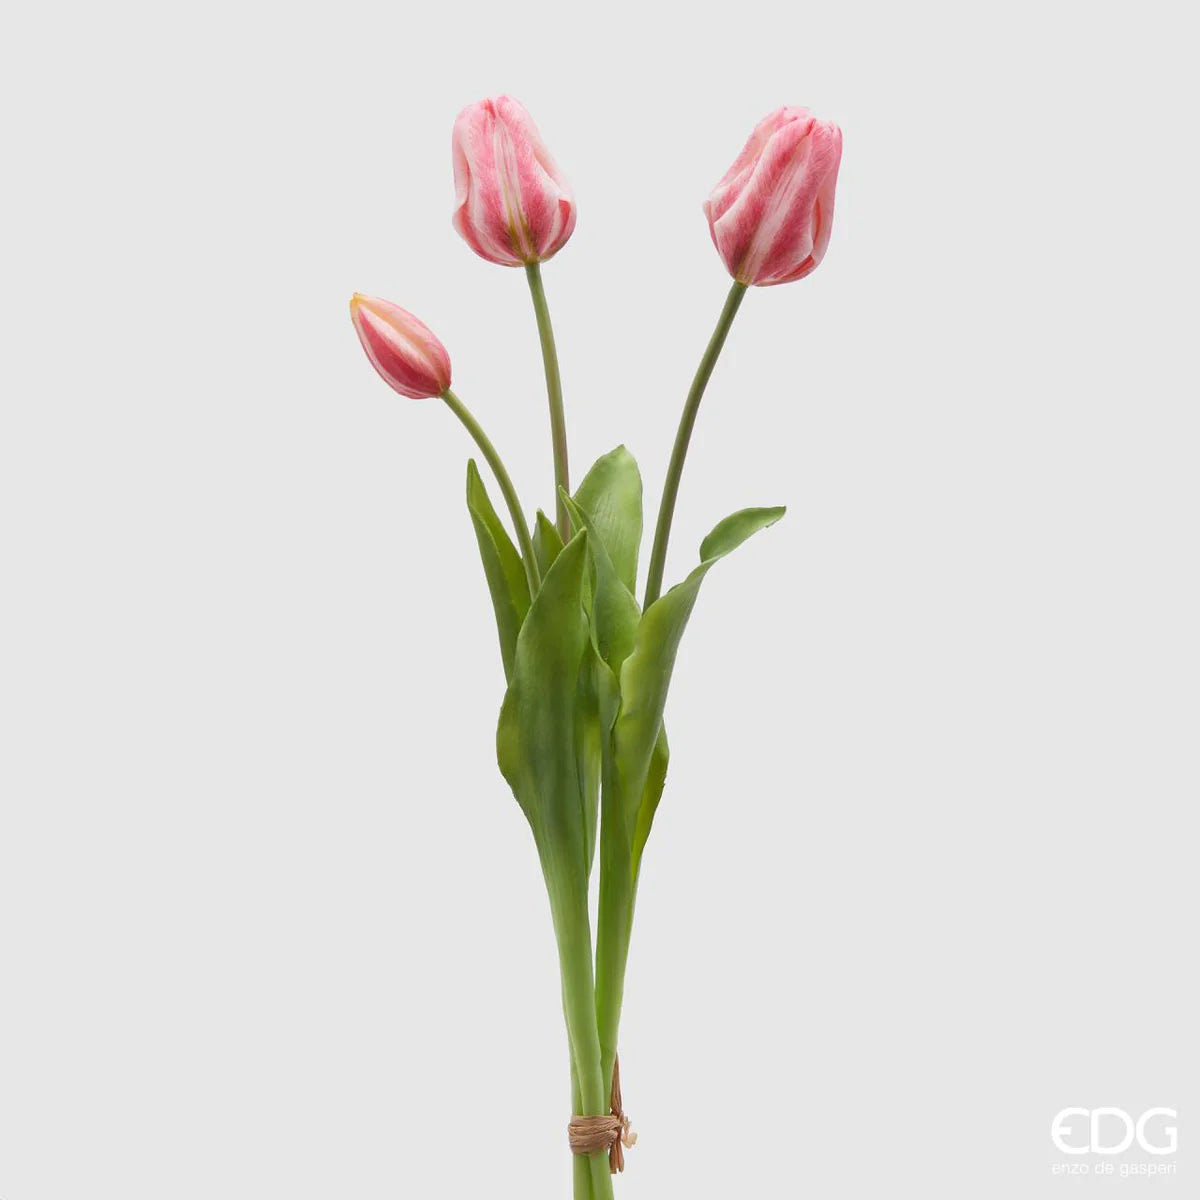 EDG - Mazzo Tulipani Olis 3 Fiori Chiusi ( Pink)